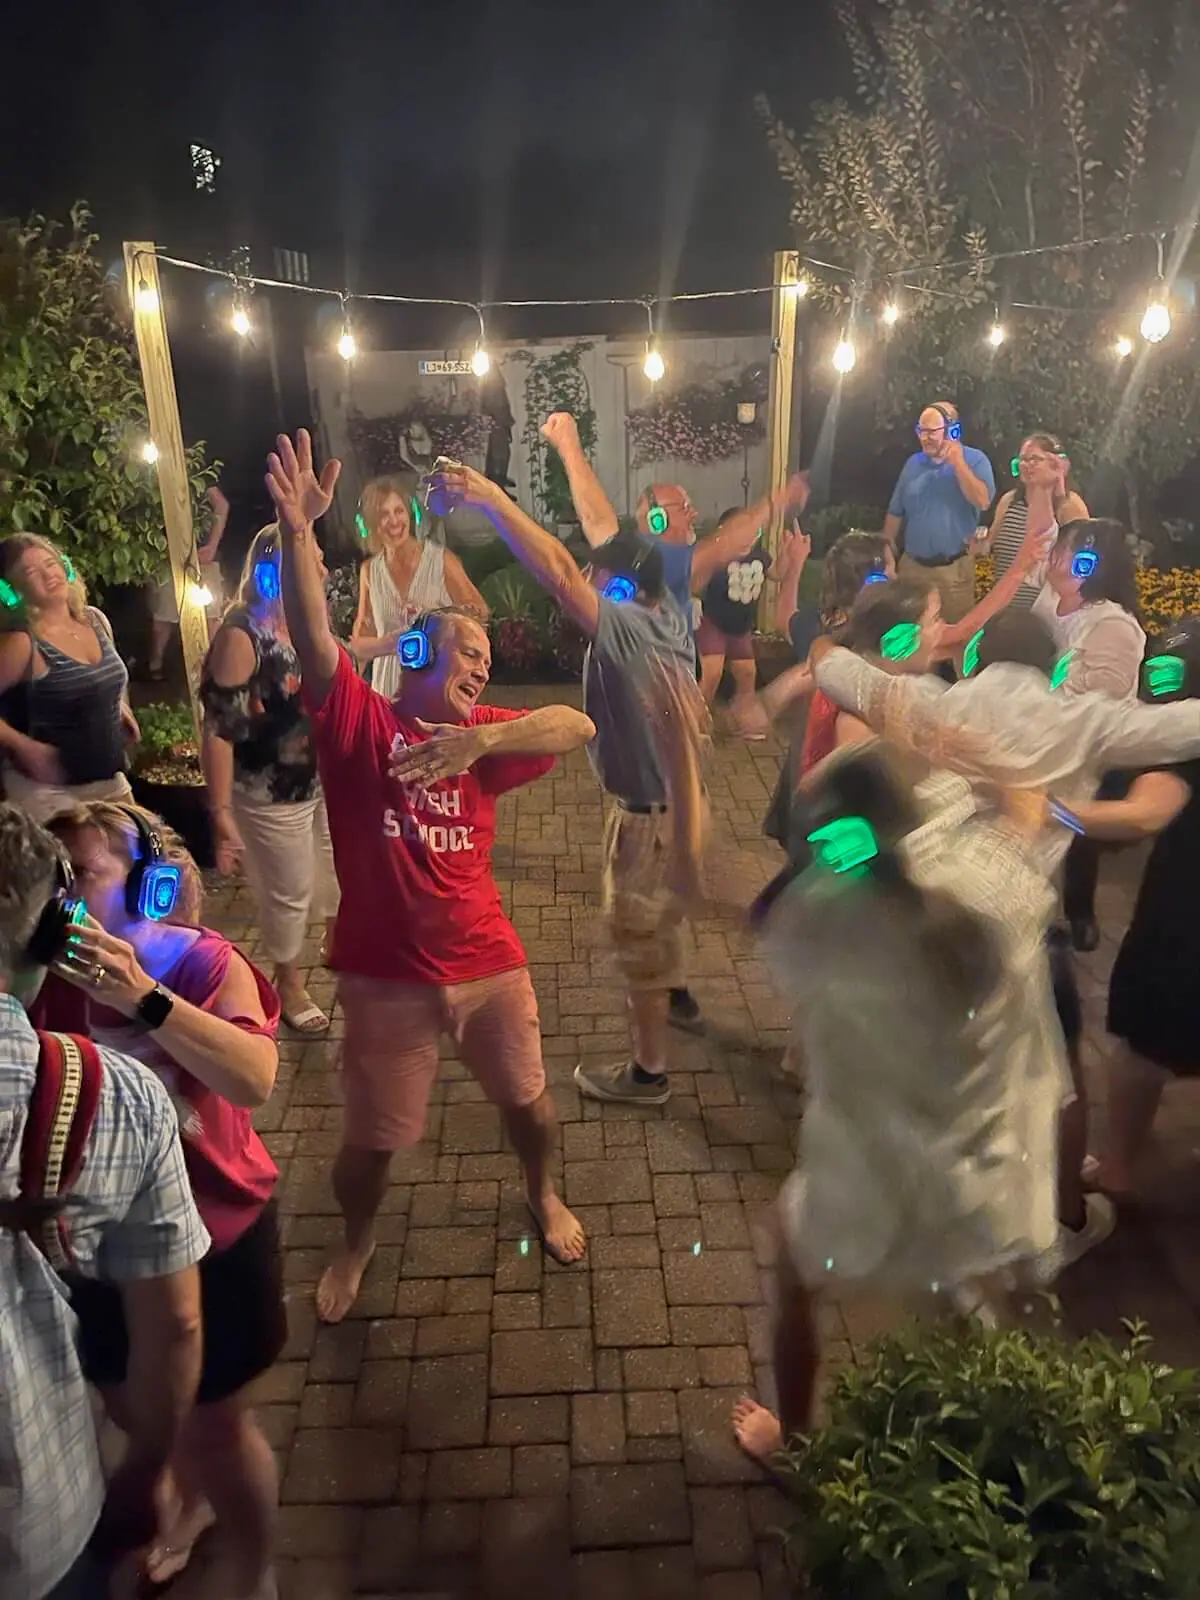 Backyard partiers dancing to with silent disco headphones